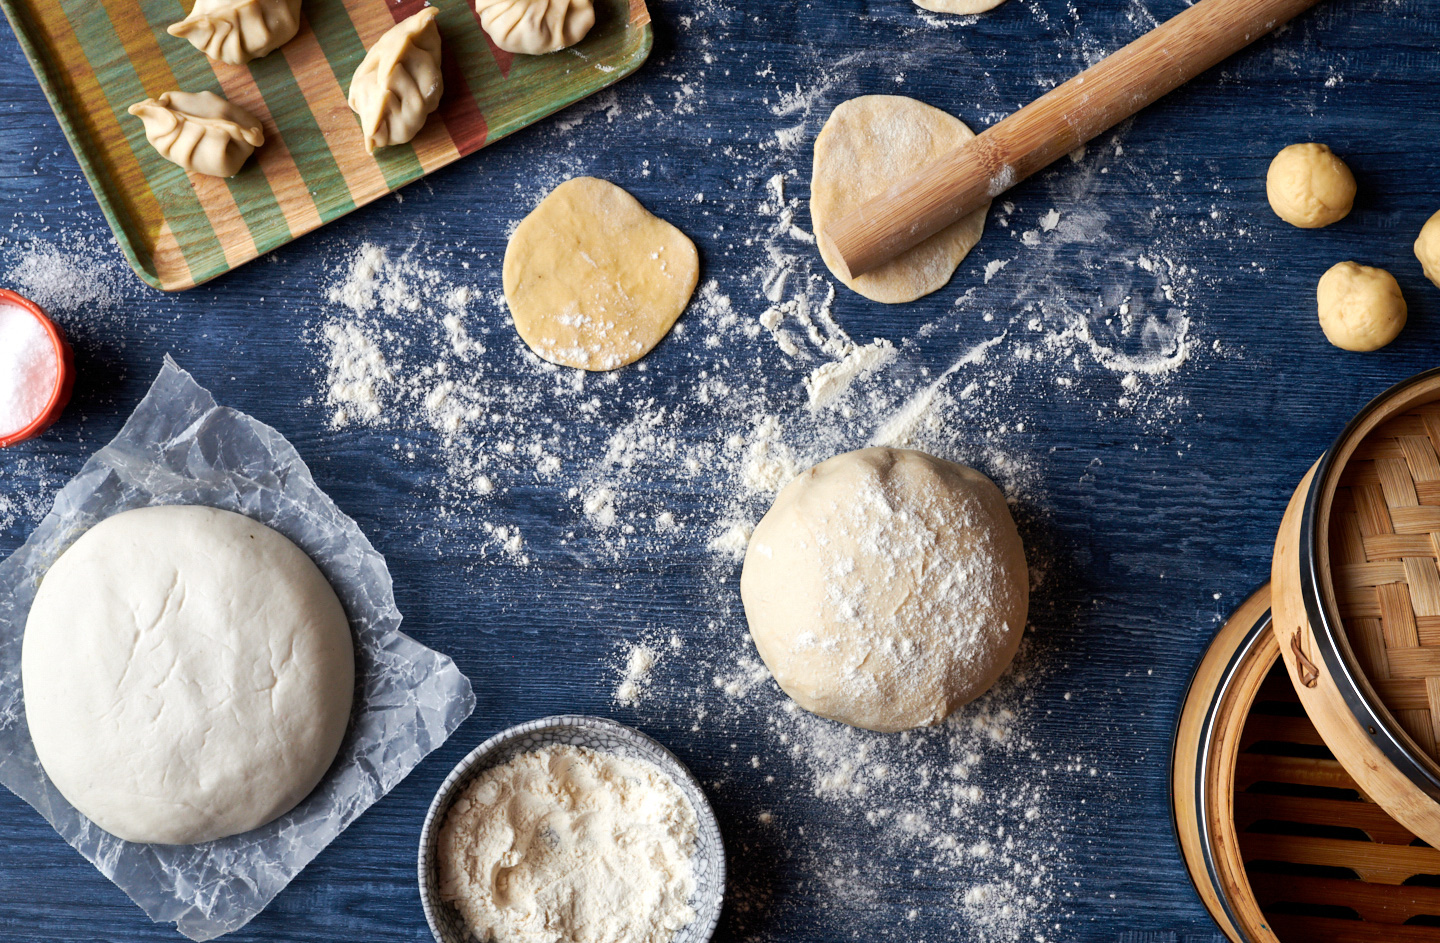 commercial-food-photographer-cookbook-dumplings-doughs-portland-oregon